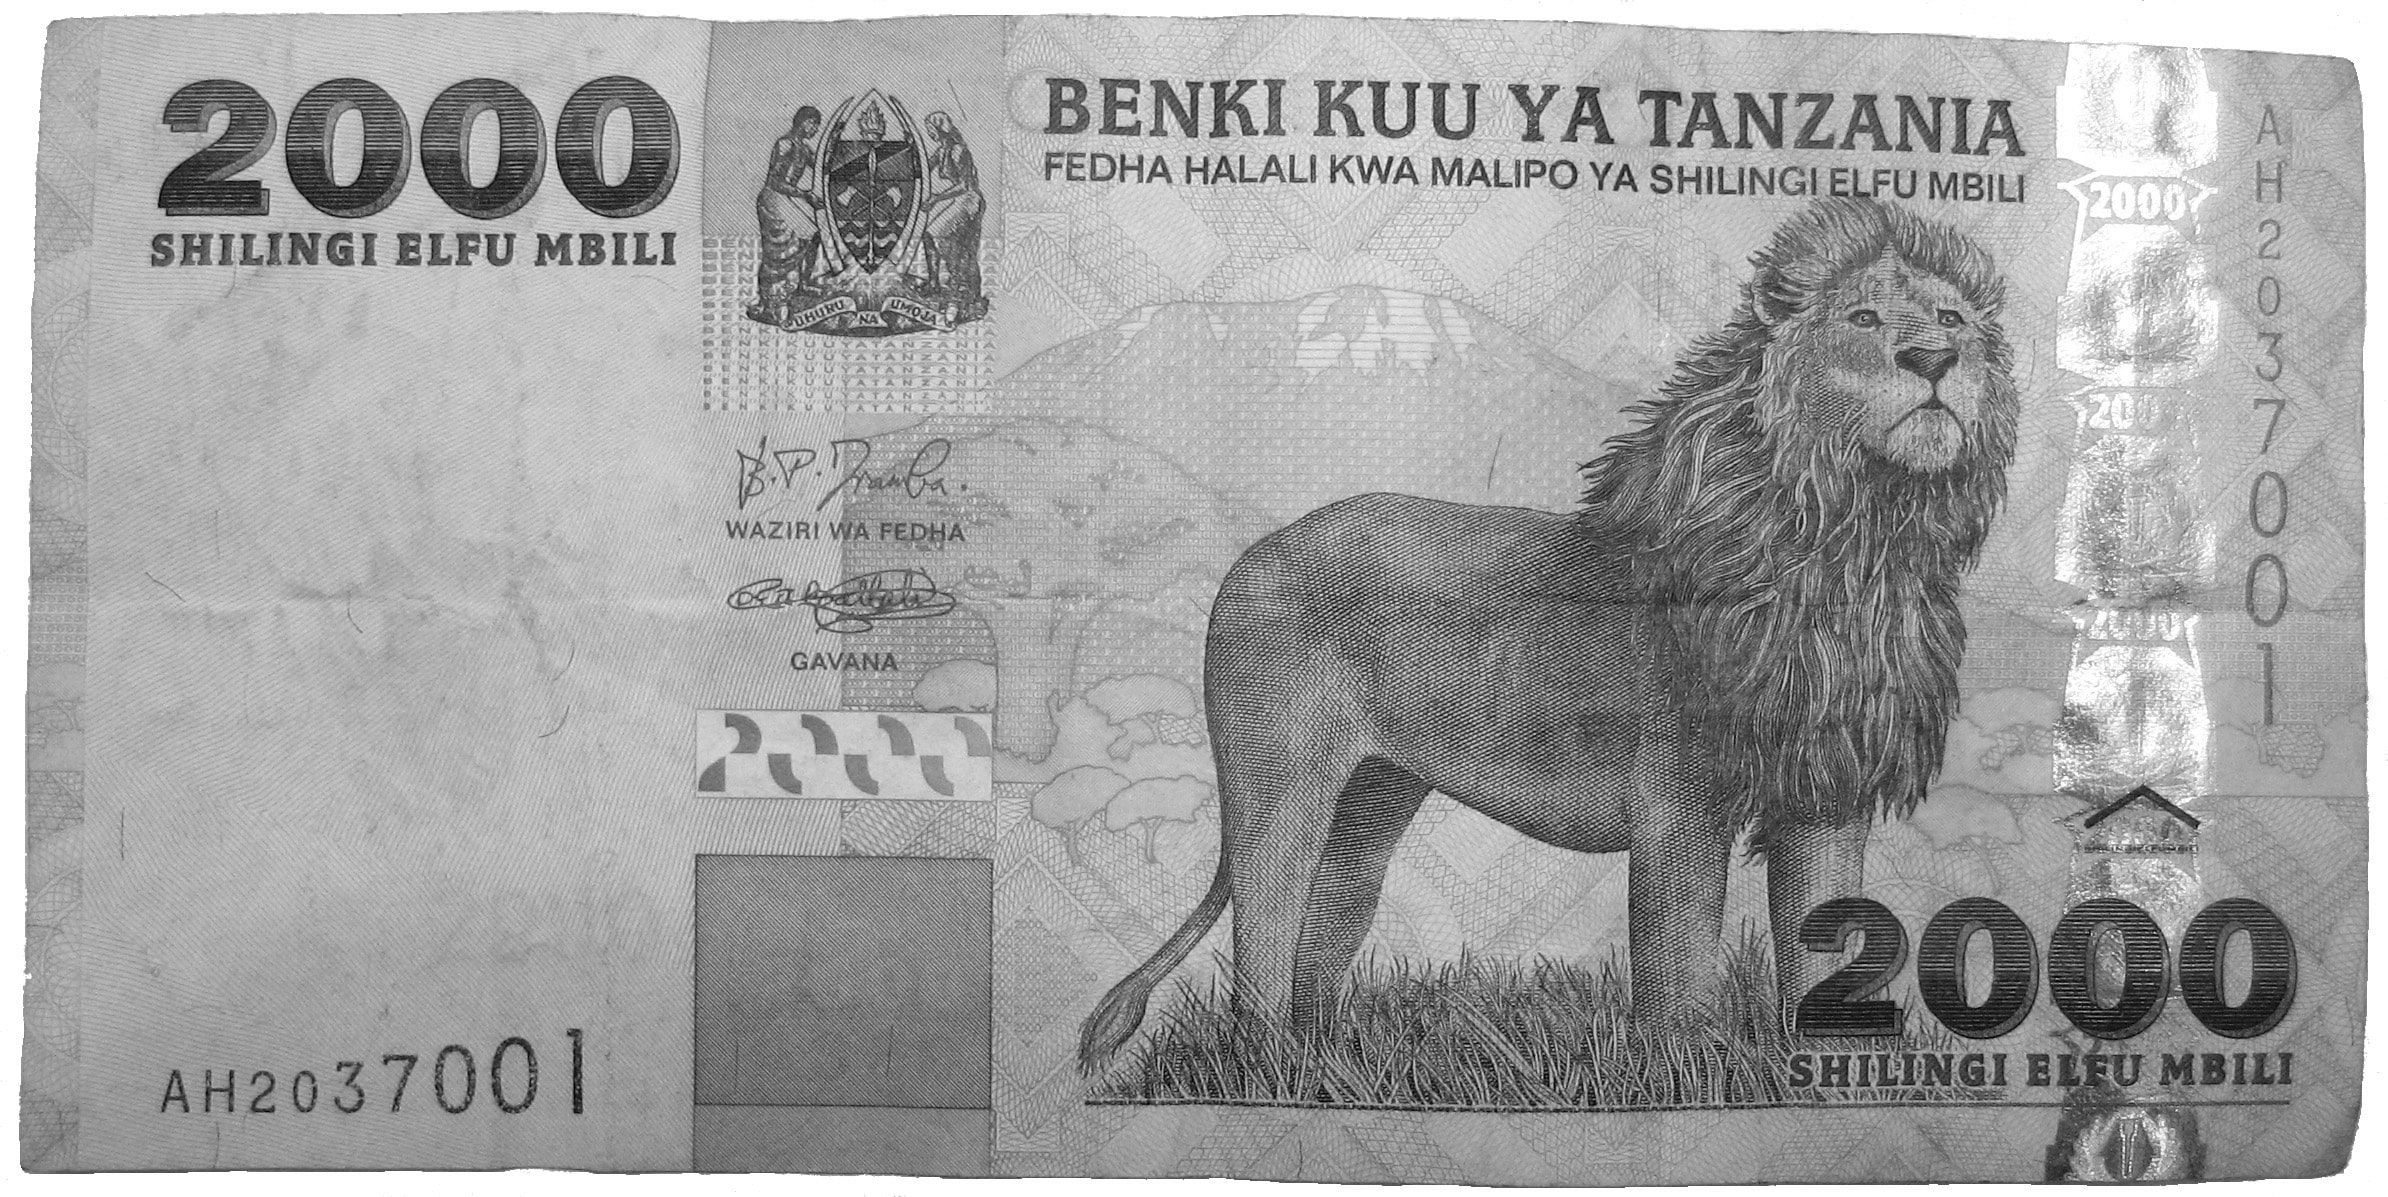 2000 Tanzanian shillings note